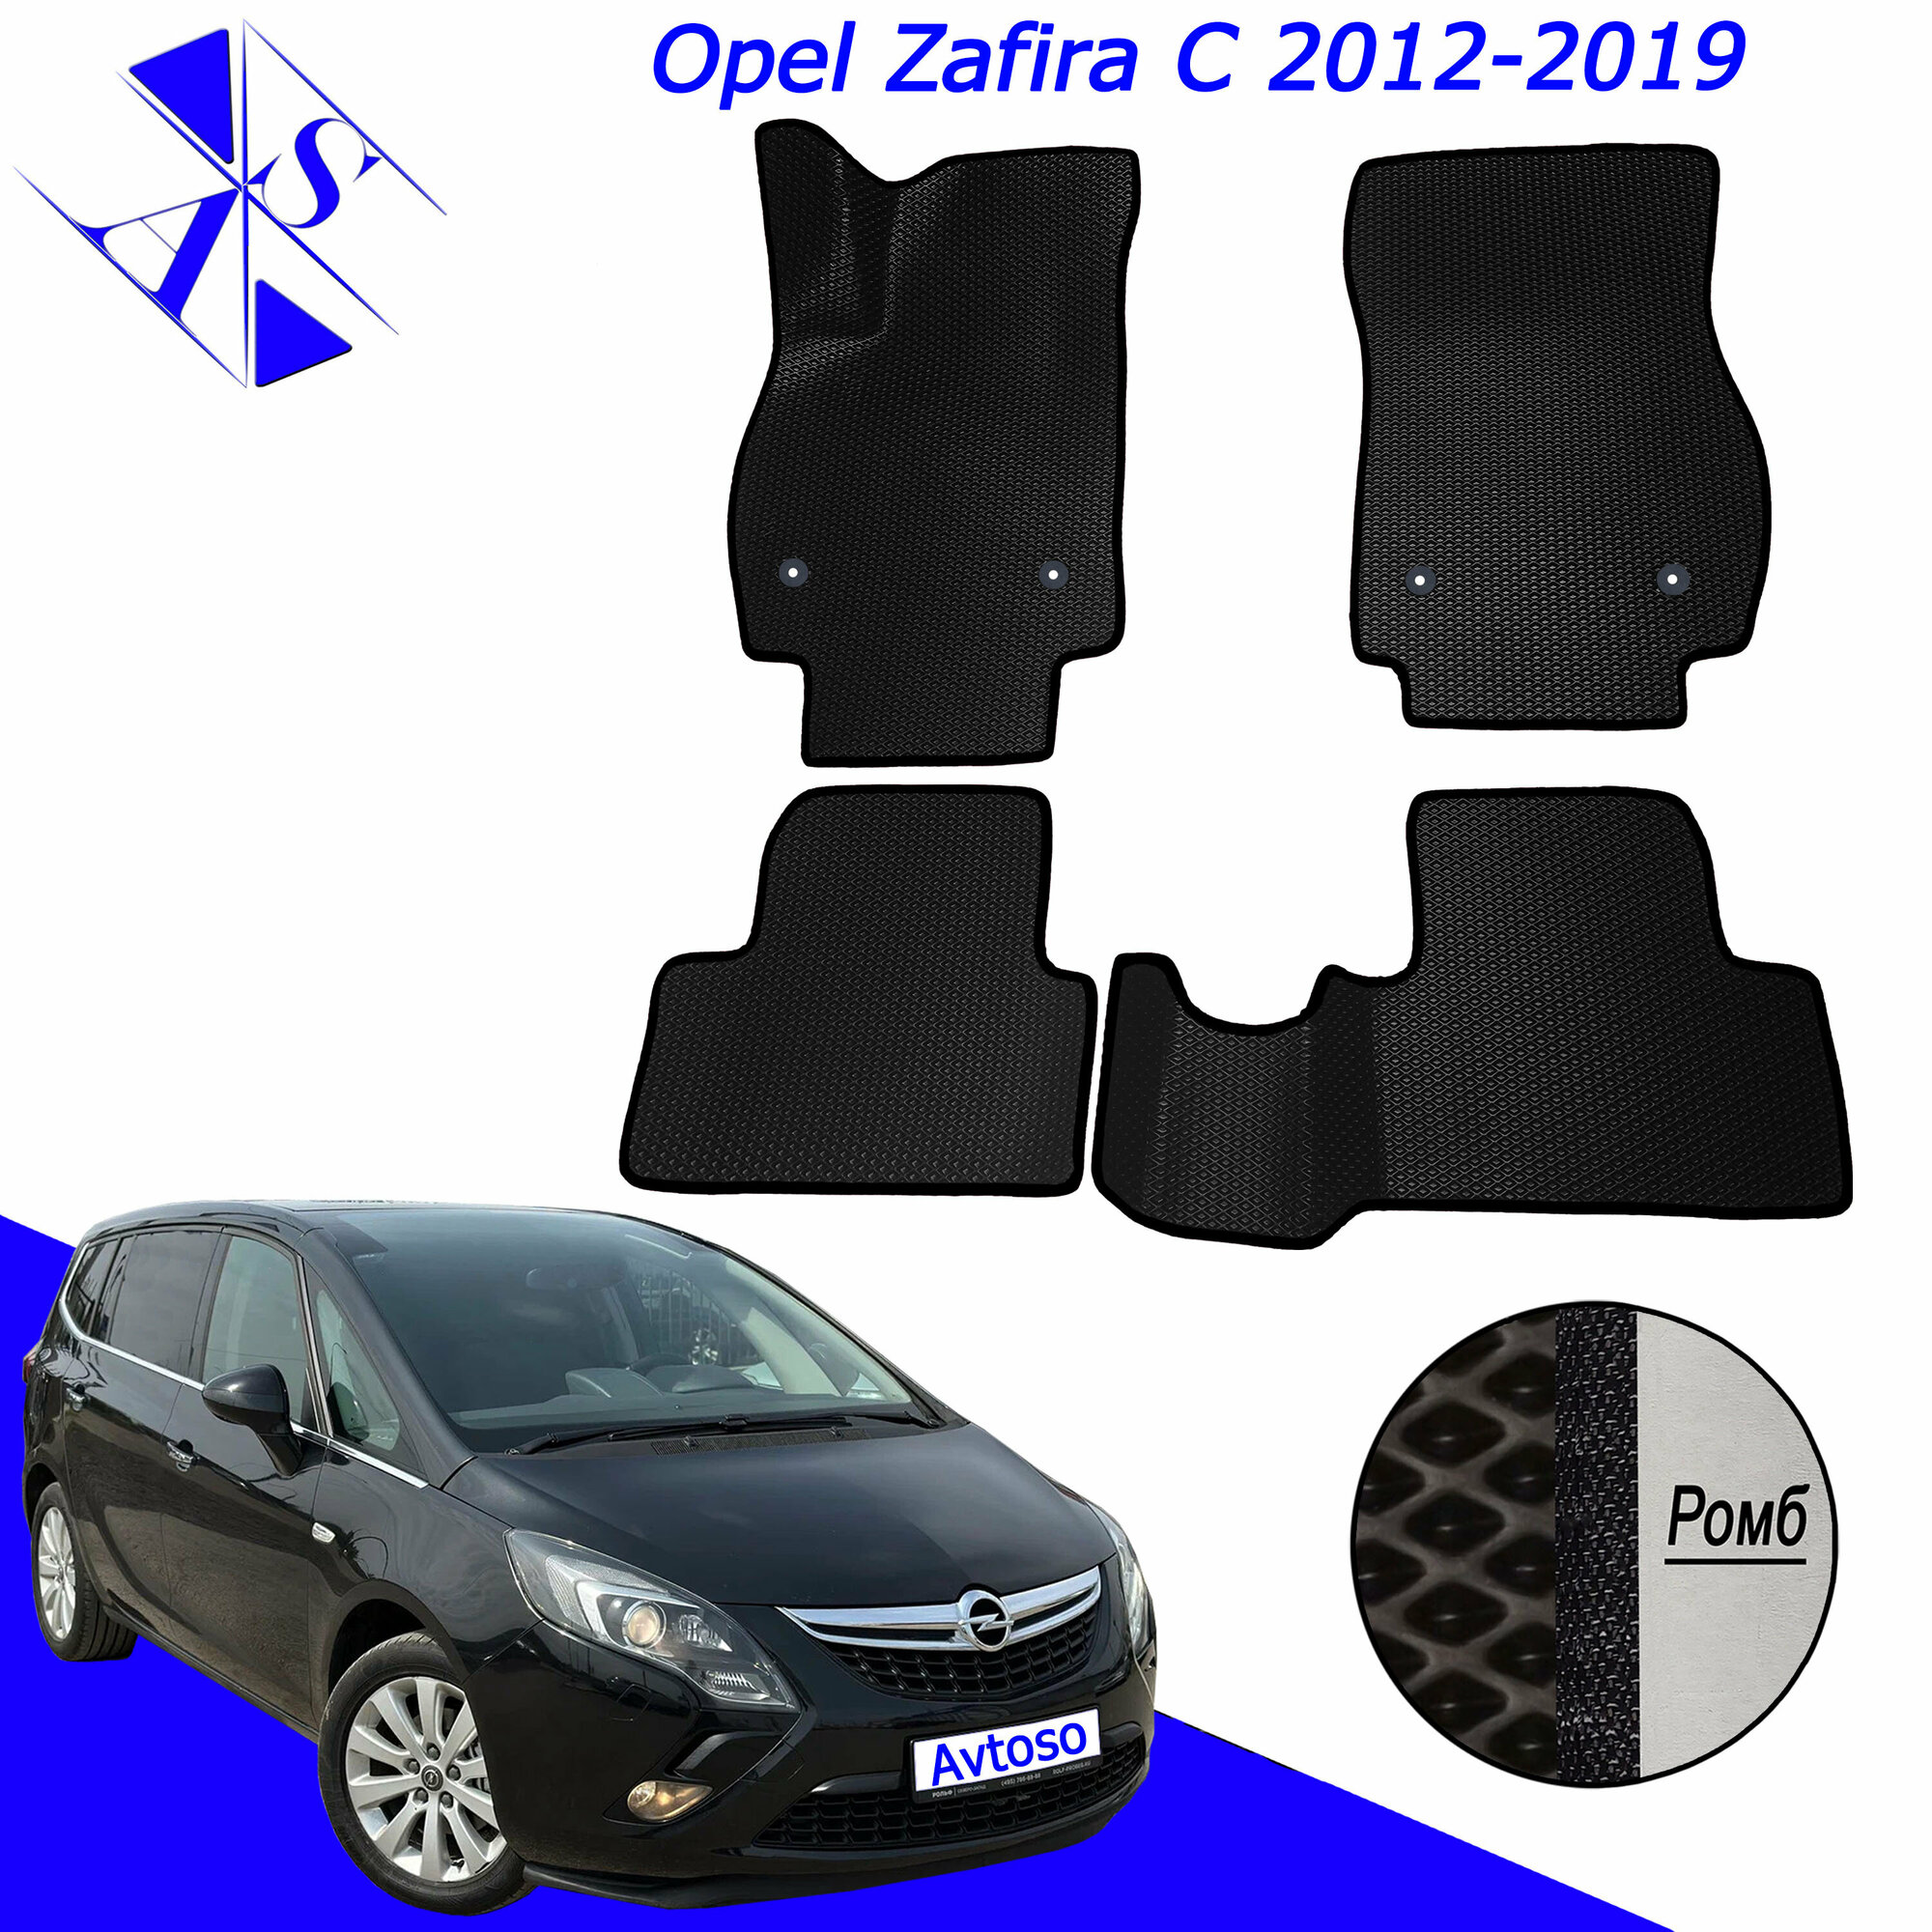 Opel Zafira C / Опель Зафира Ц 2012-2019